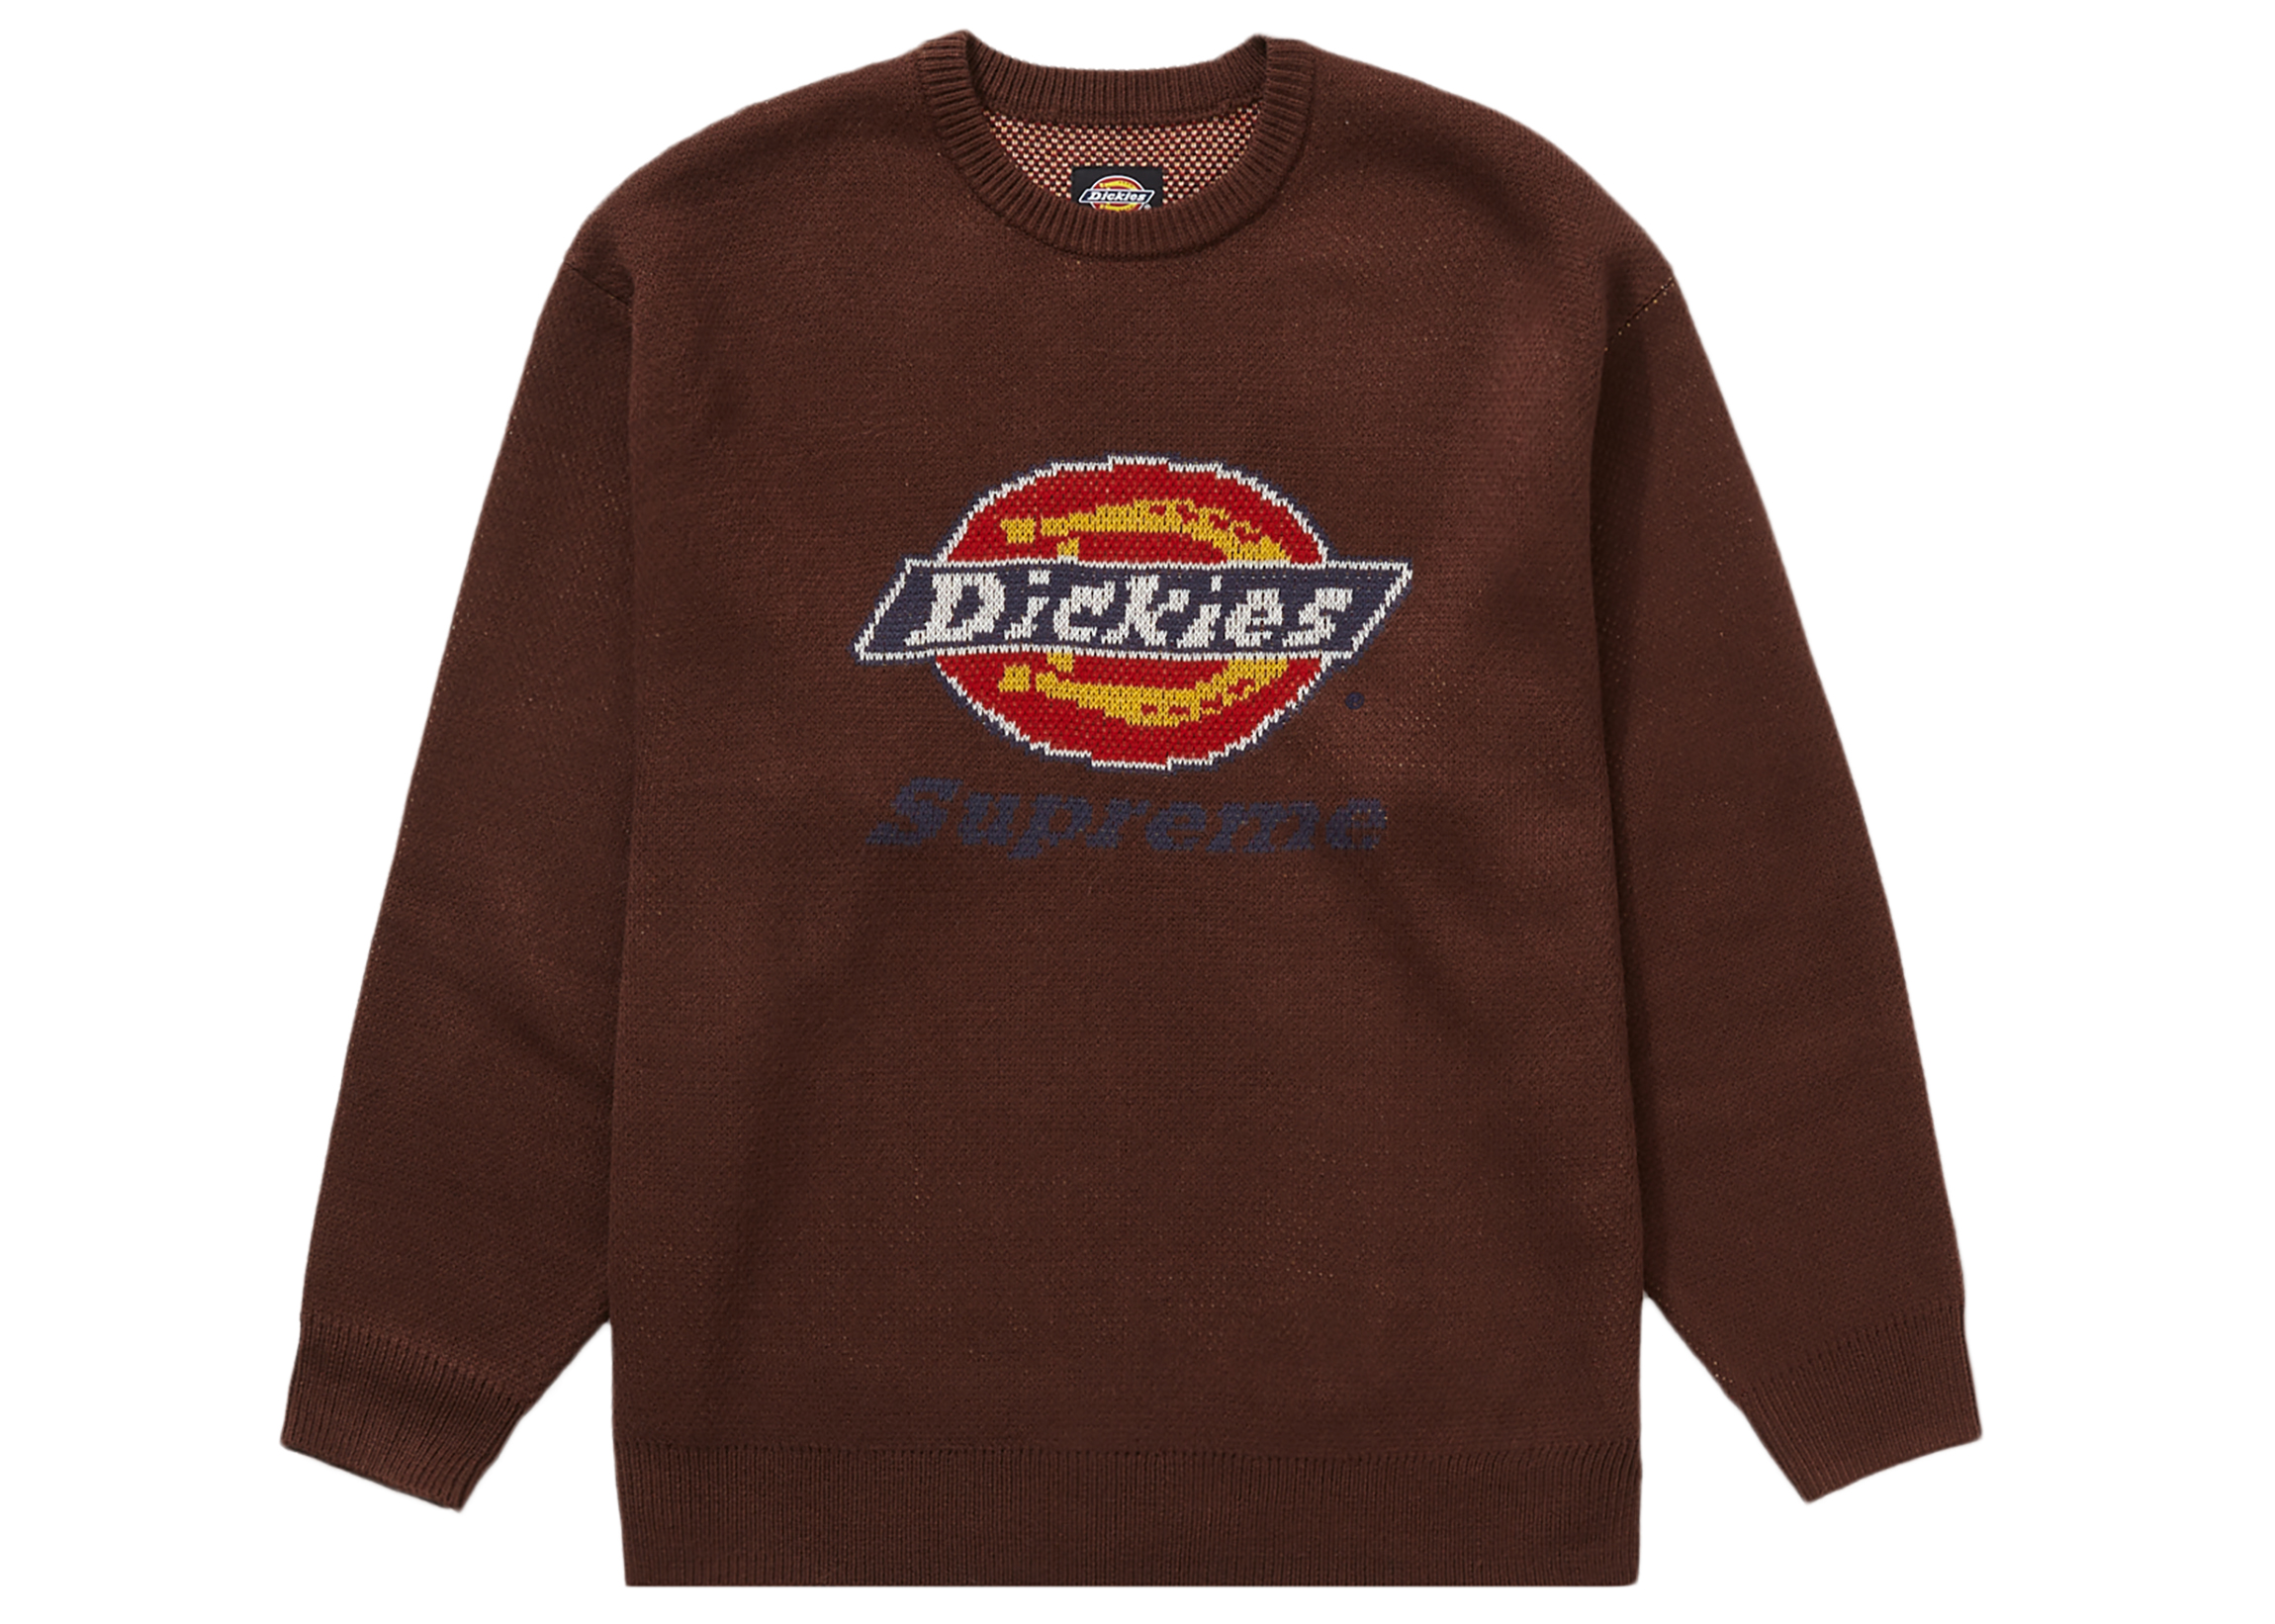 Supreme Dickies Sweater Brown